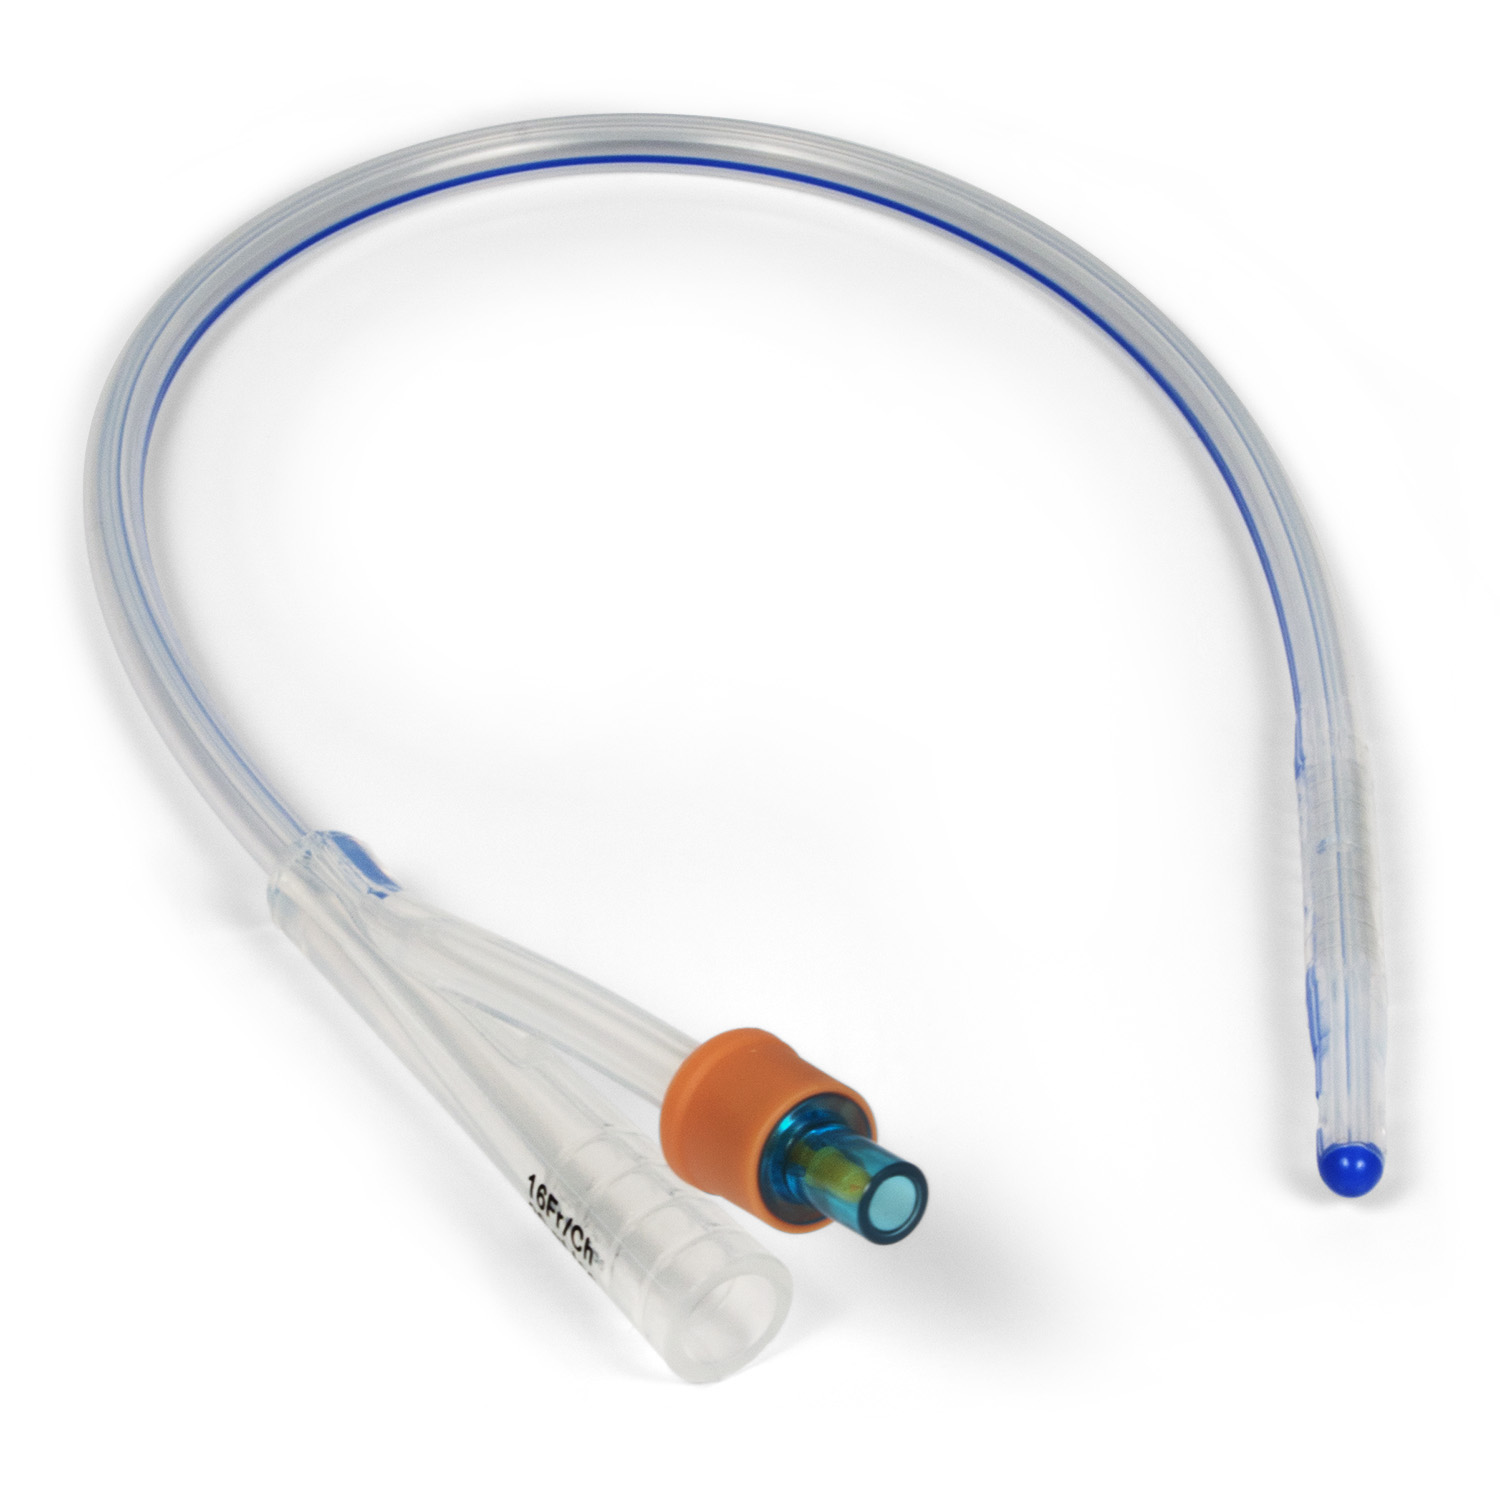 Silicone Foley Catheters 2-way Standard - 22FR / 5-10cc